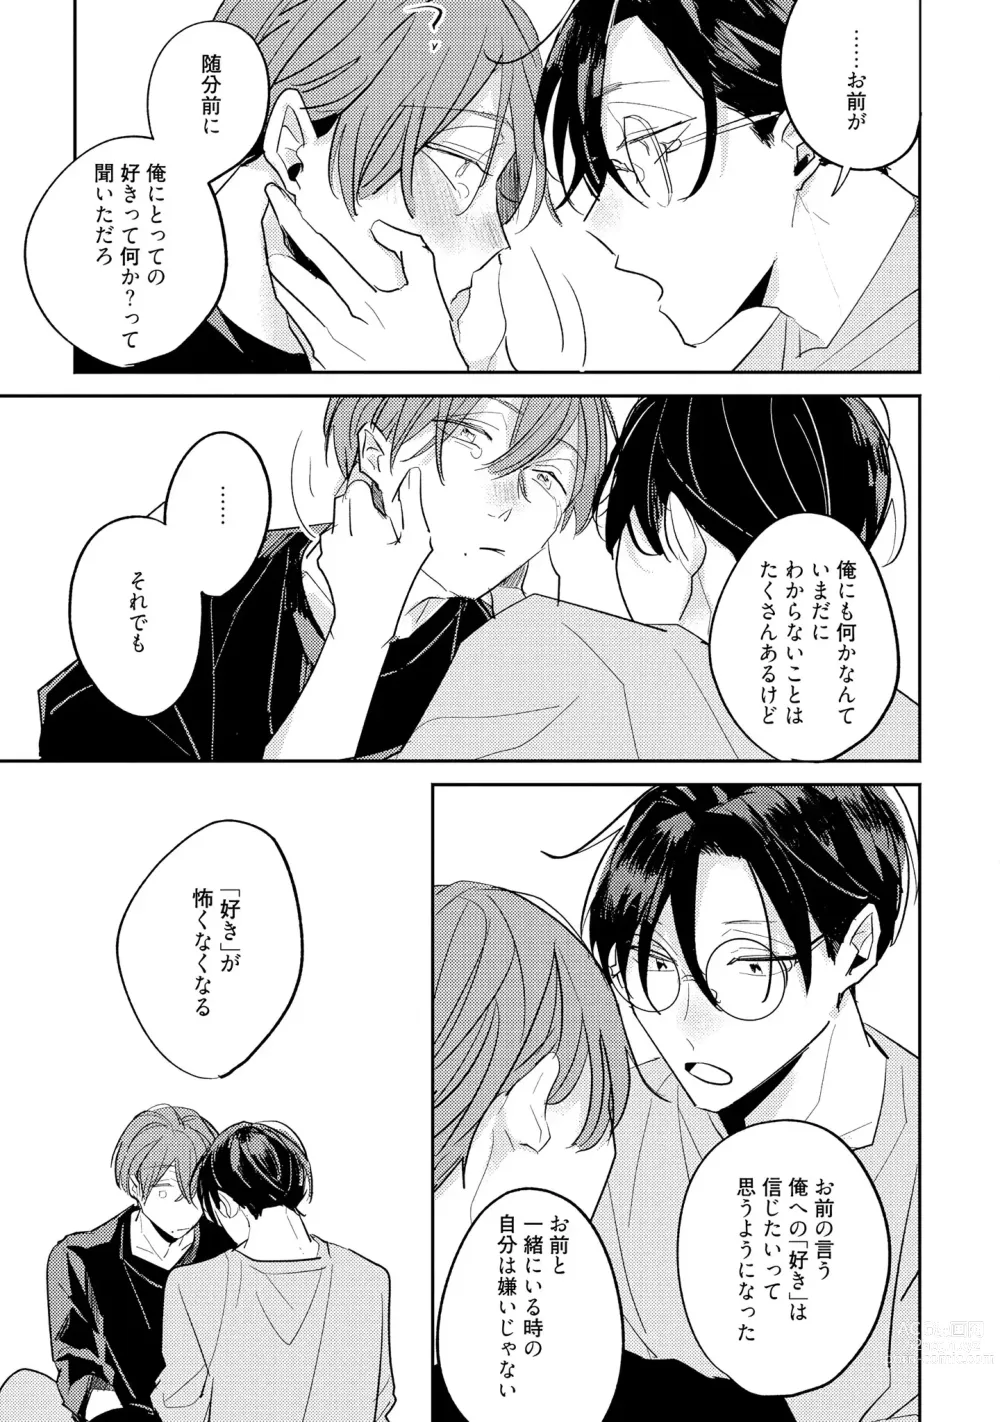 Page 225 of manga No Doubt Lilac